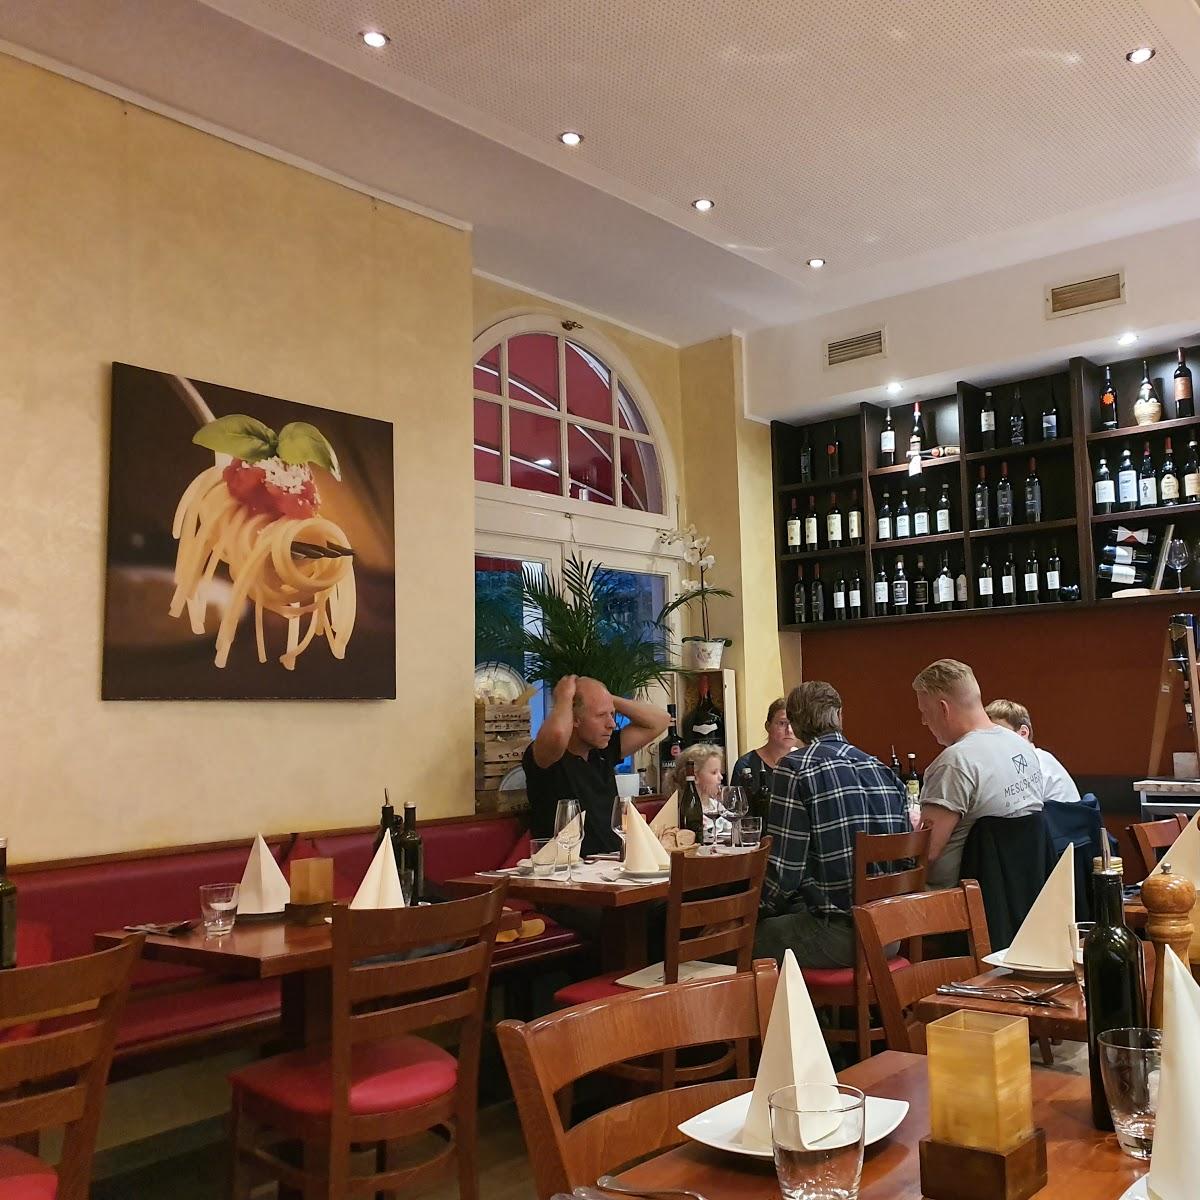 Restaurant "Trattoria La Noce" in Düsseldorf